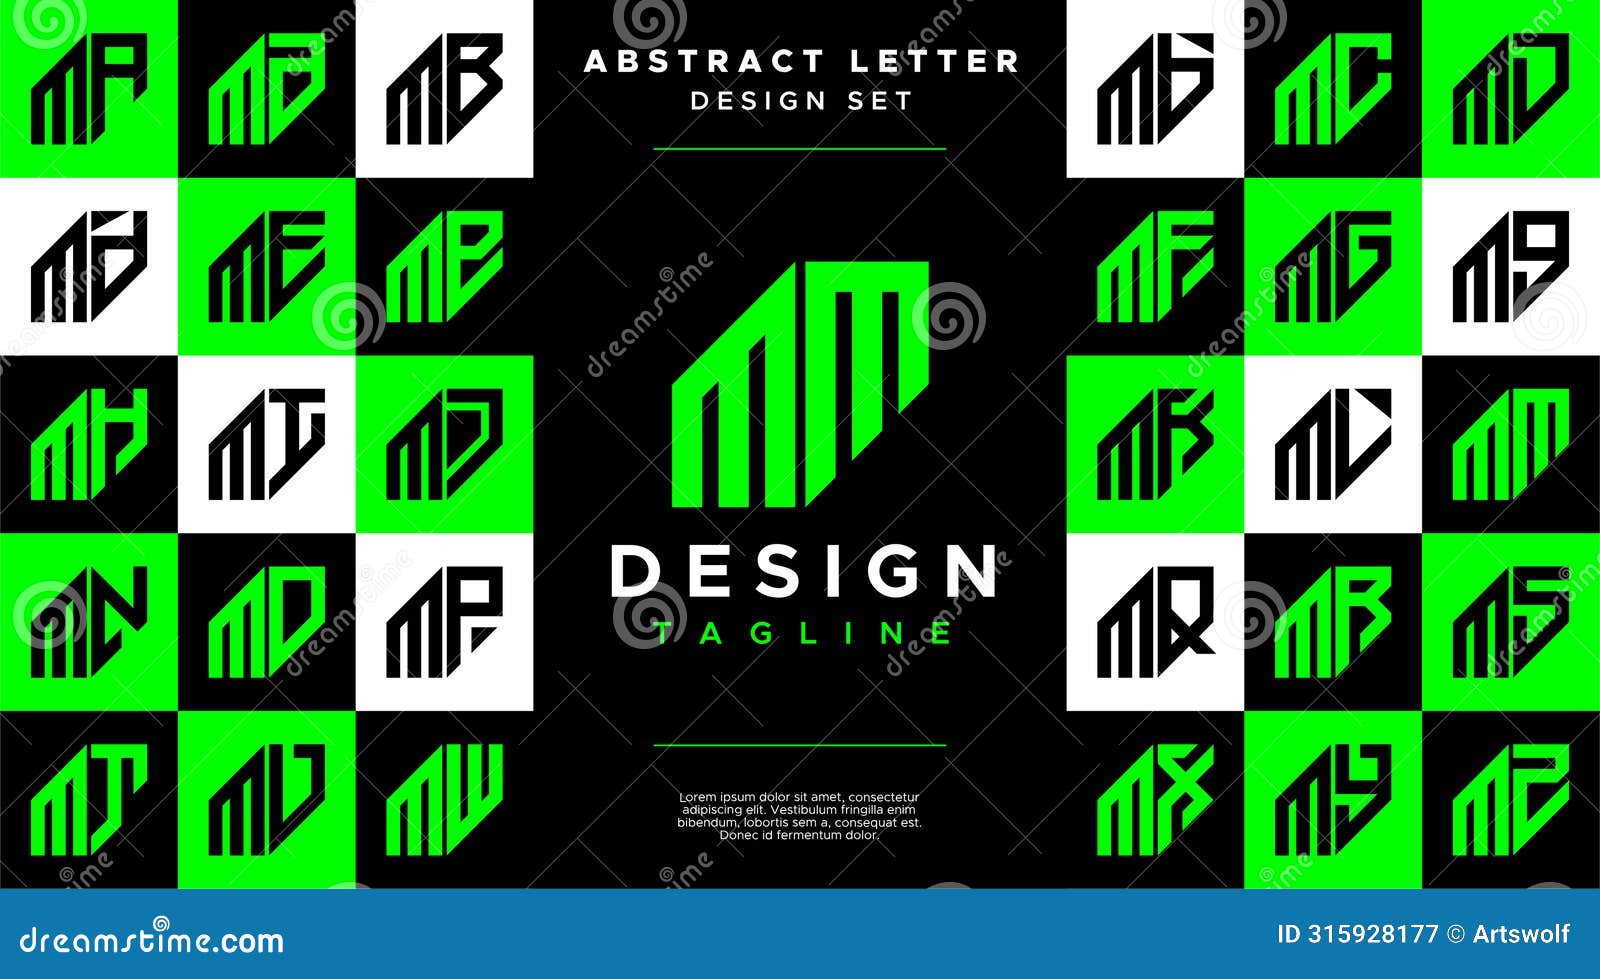 modern sharp line abstract letter m mm logo bundle